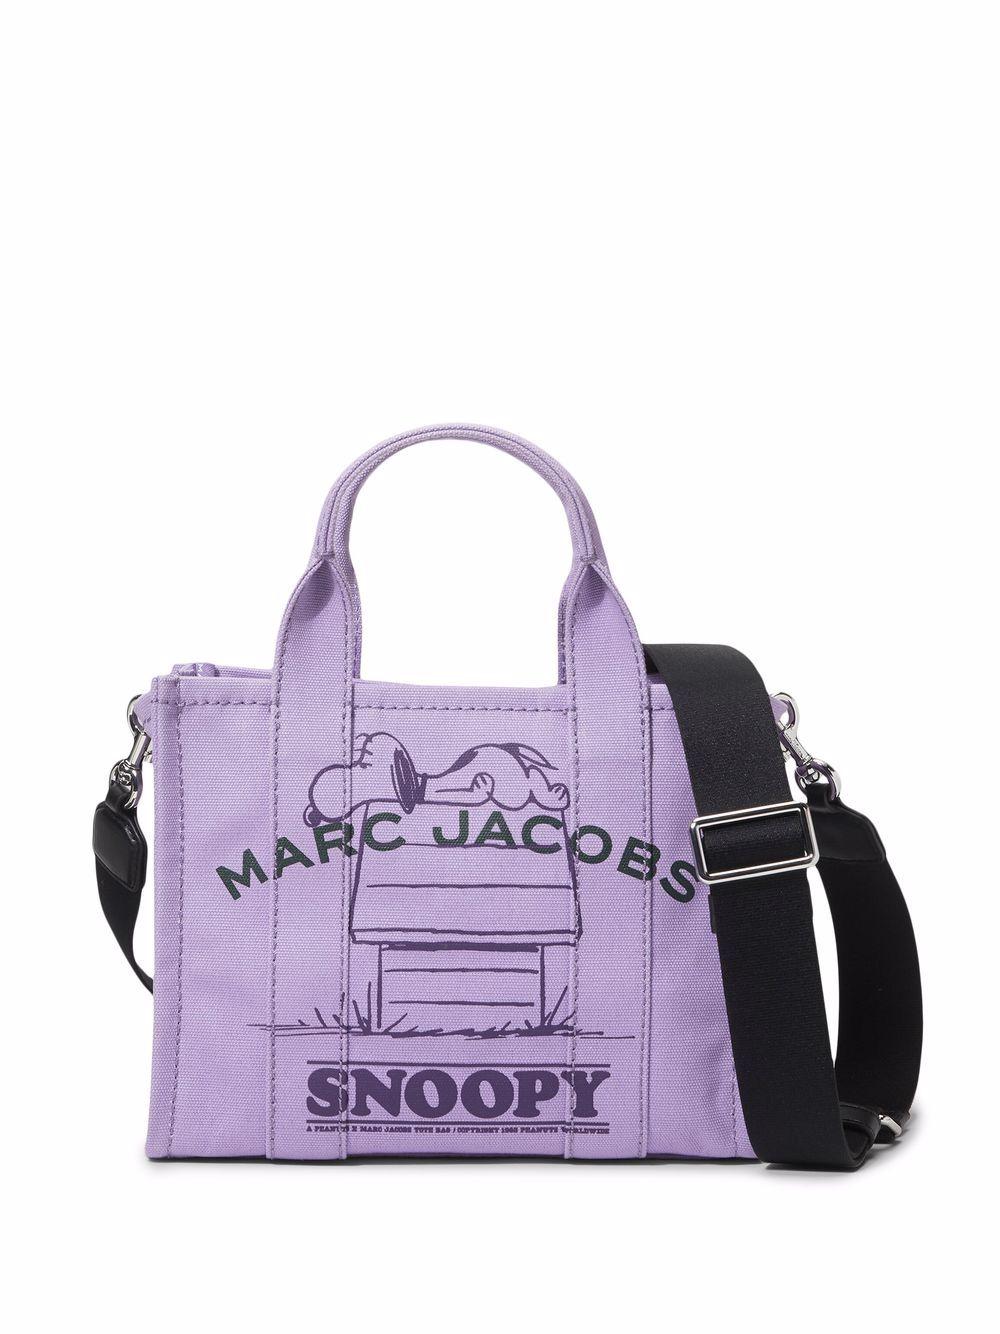 Marc Jacobs X Peanuts The Mini Snoopy Tote Bag in Purple | Lyst